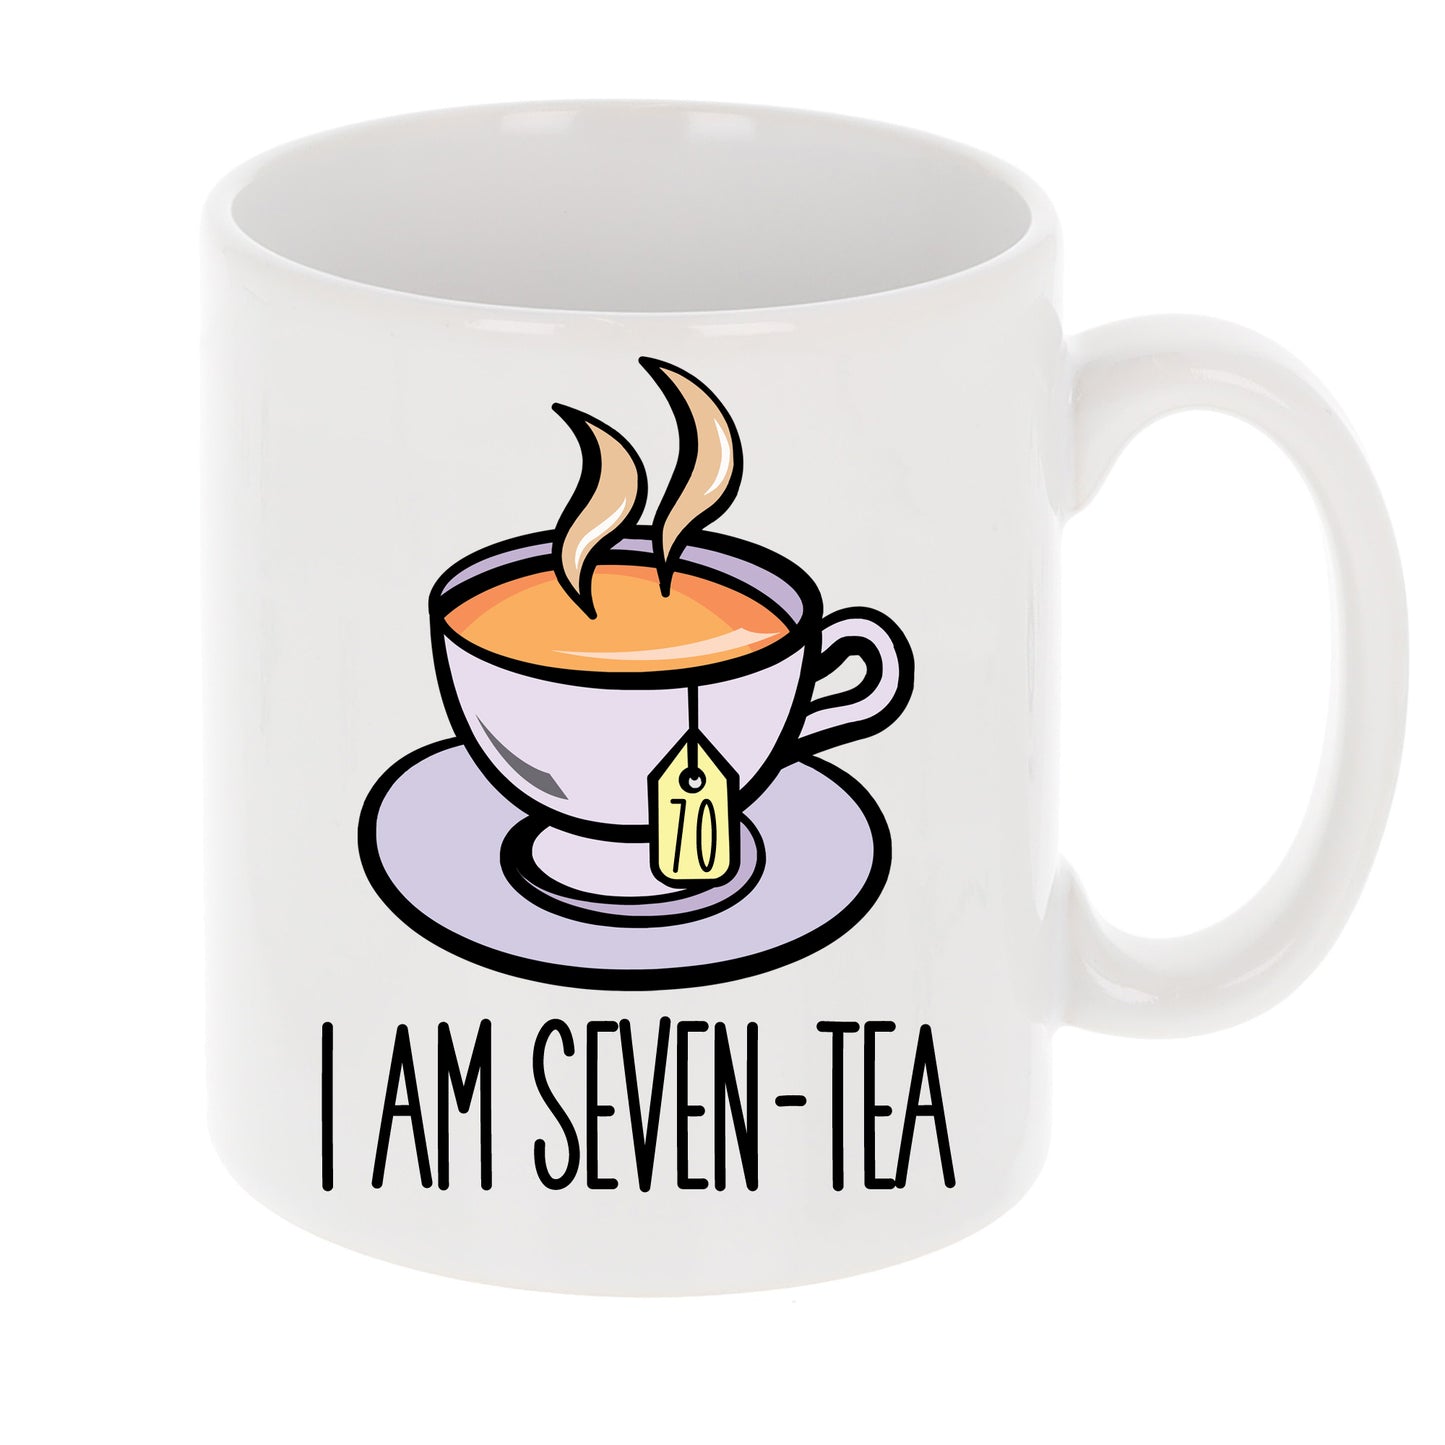 I Am Seven-Tea Funny 70th Birthday Mug Gift for Tea Lovers  - Always Looking Good - Mug Only  